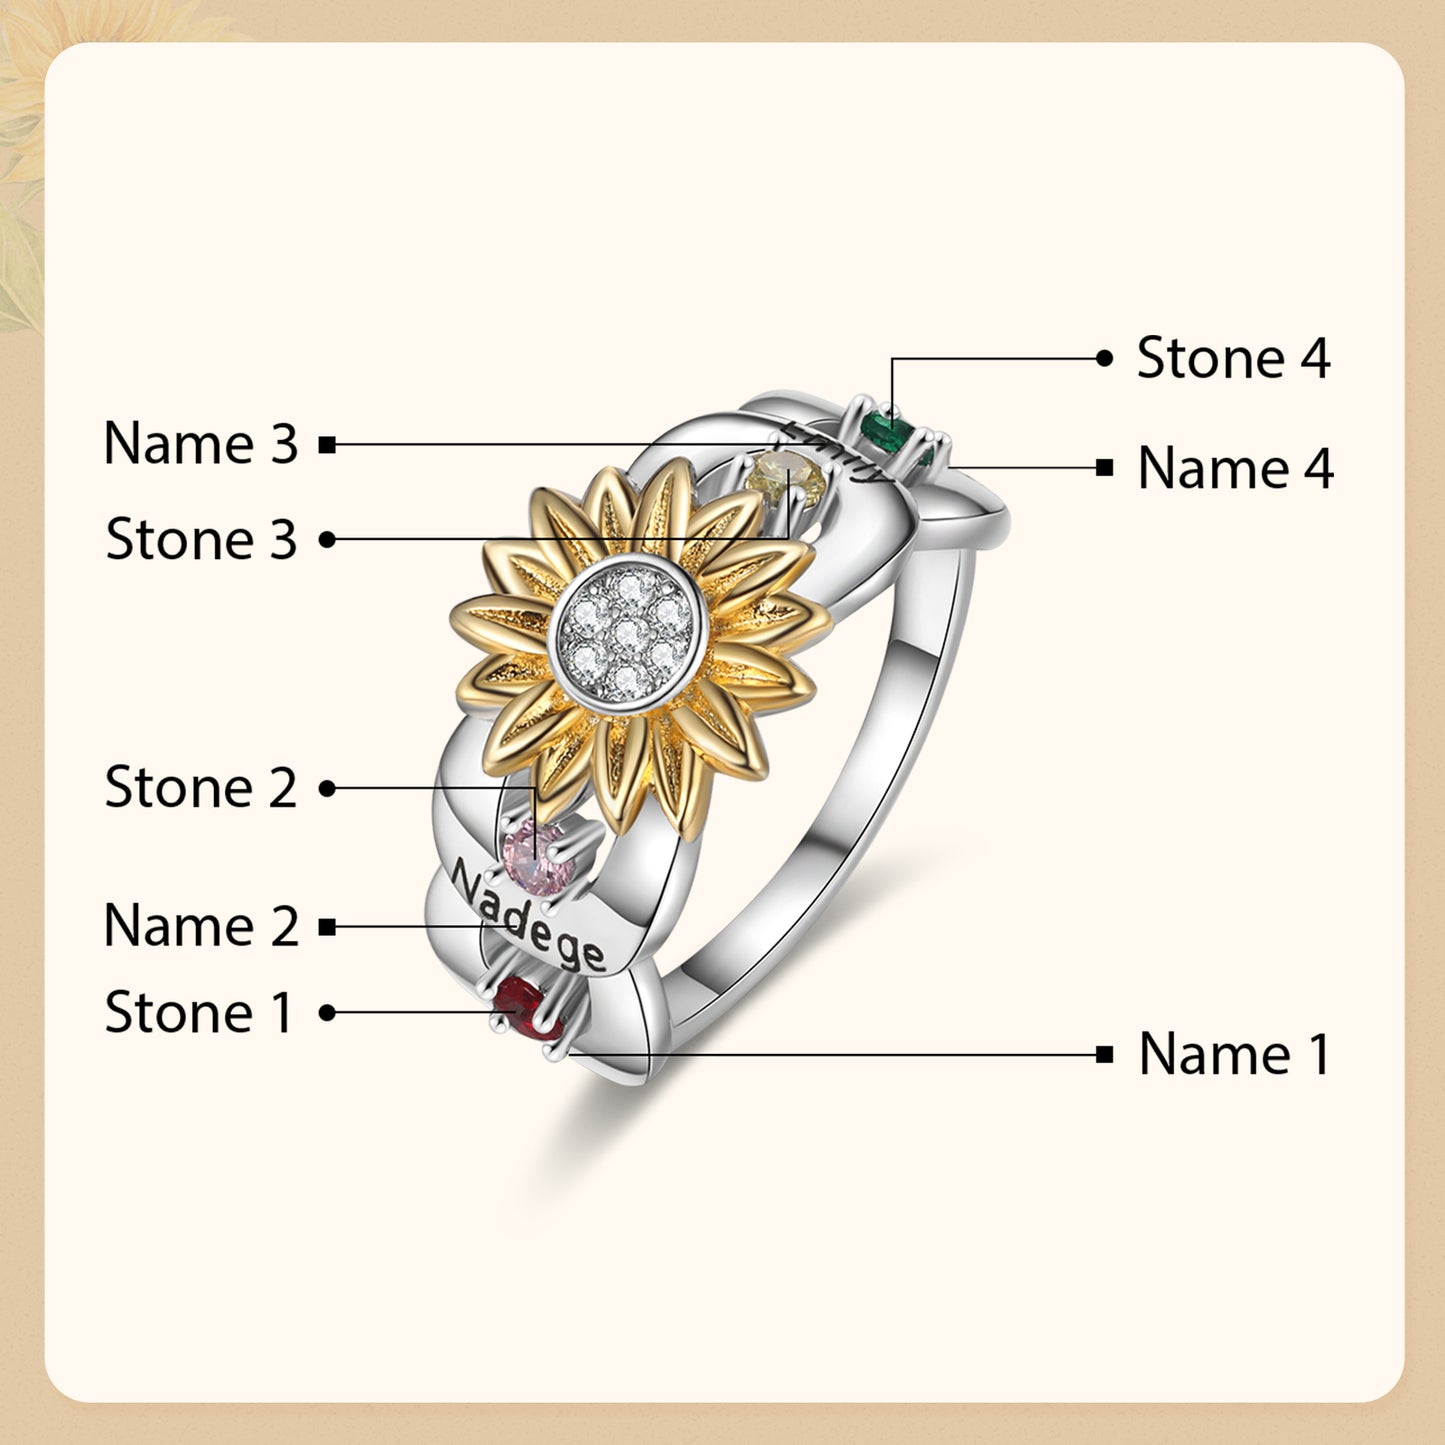 Custom Infinity and Sunflower Ring